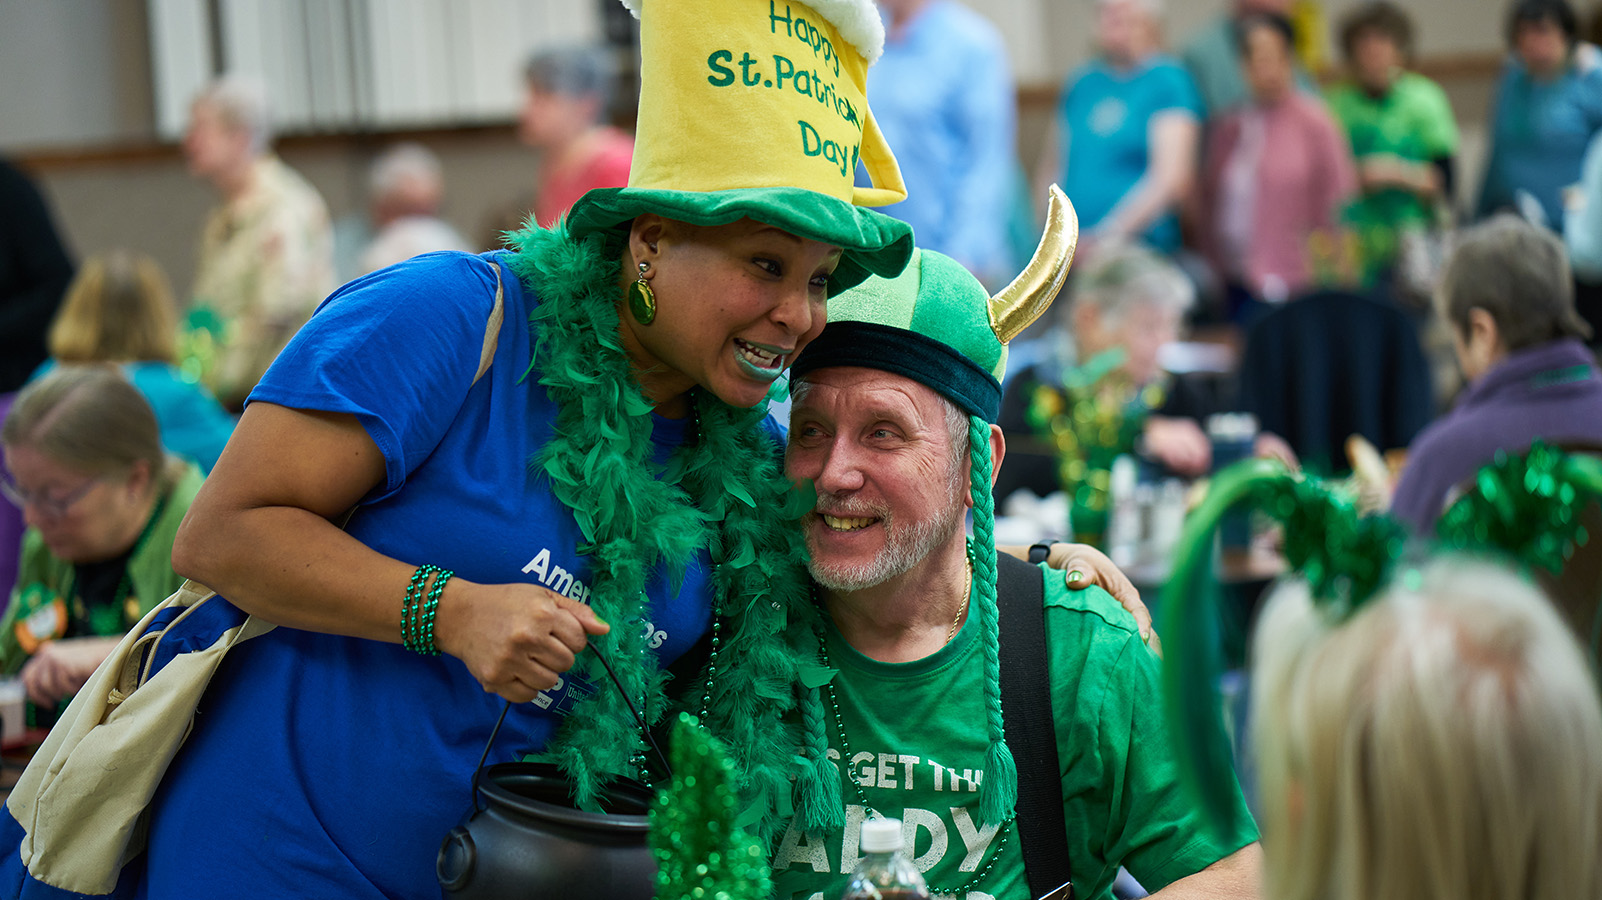 rsvp volunteer with elderly man at St. Patricks day celebration